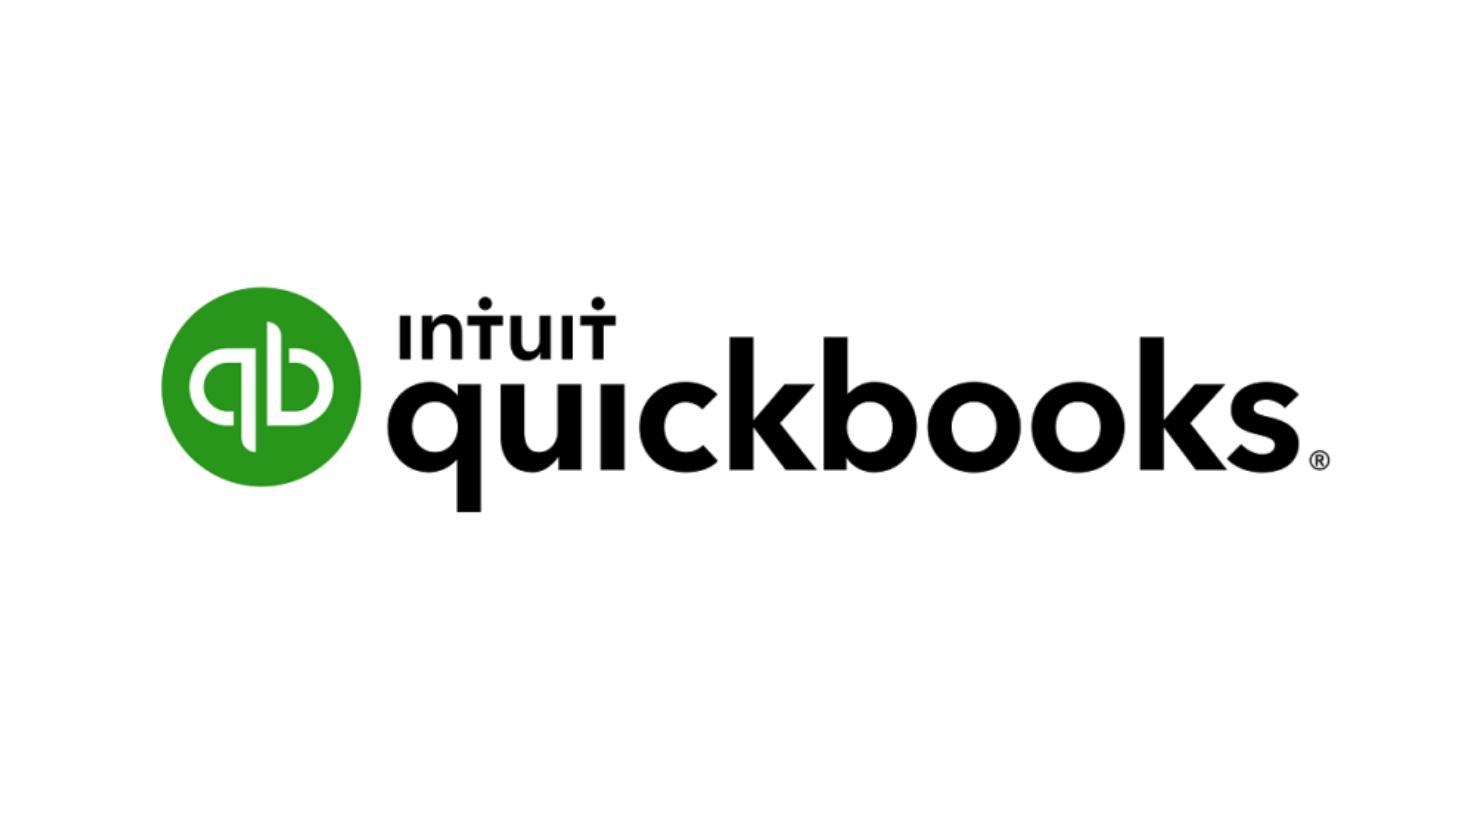 Quickbooks integration